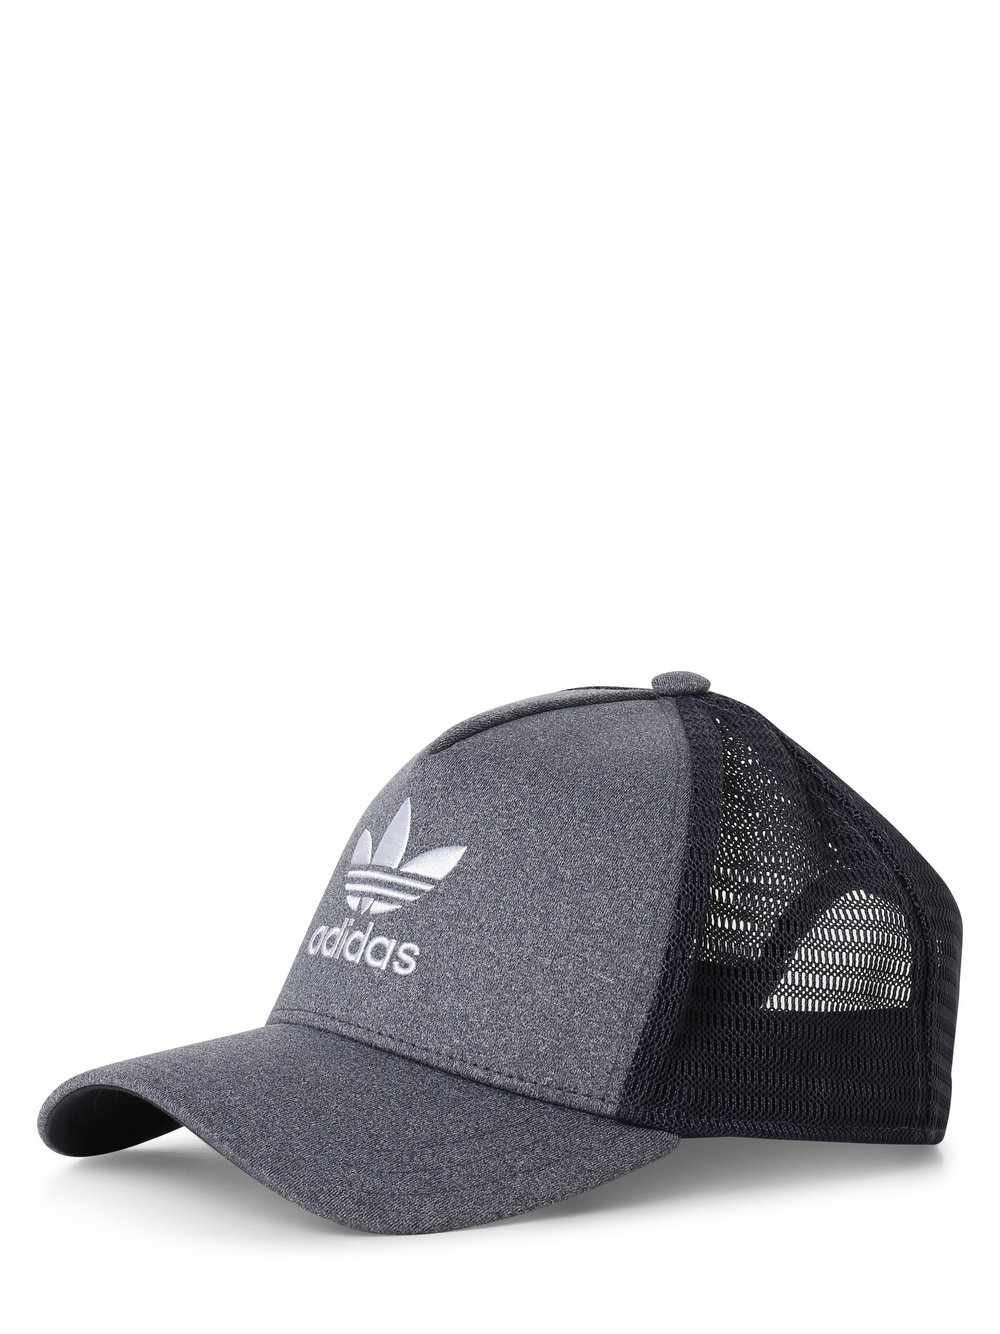 Adidas Originals - Męska czapka z daszkiem, niebieski